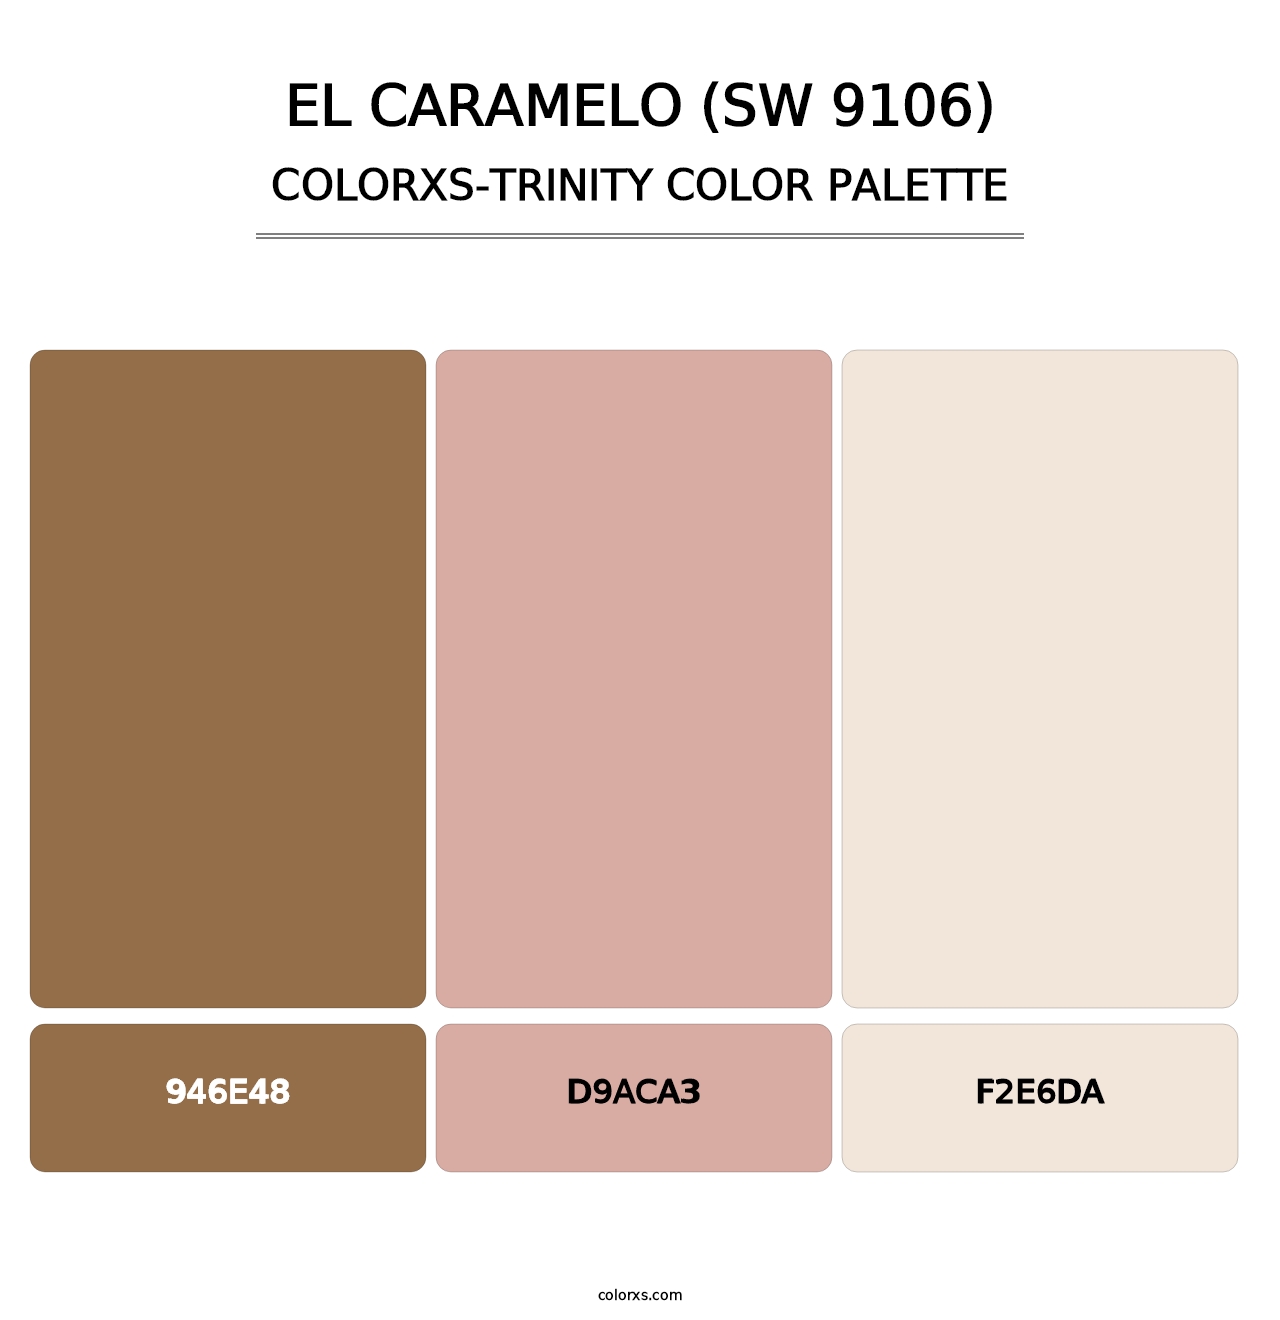 El Caramelo (SW 9106) - Colorxs Trinity Palette